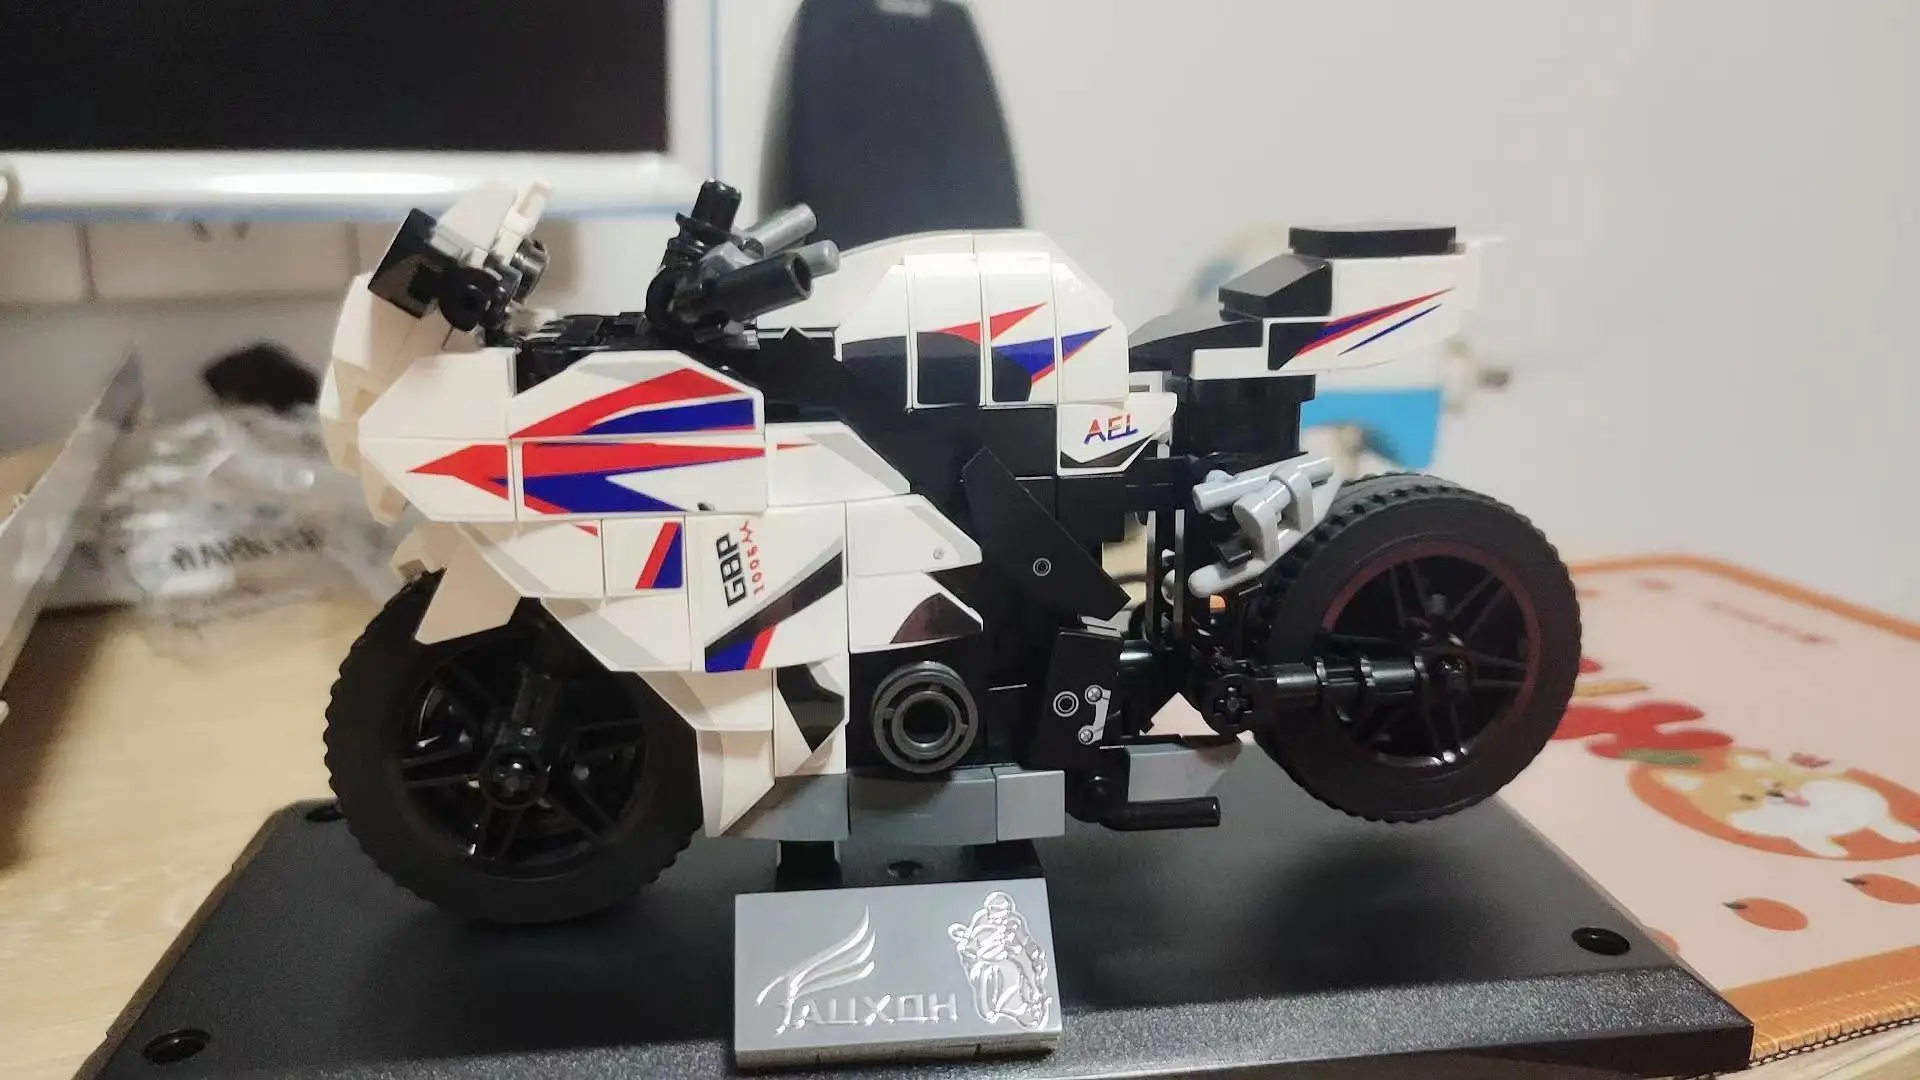 

CBR1000RR Racing Car Motorcycle Off-road Motorbike Model Building Blocks MOC Sport Vehicle Bricks Toys Gifts For Children